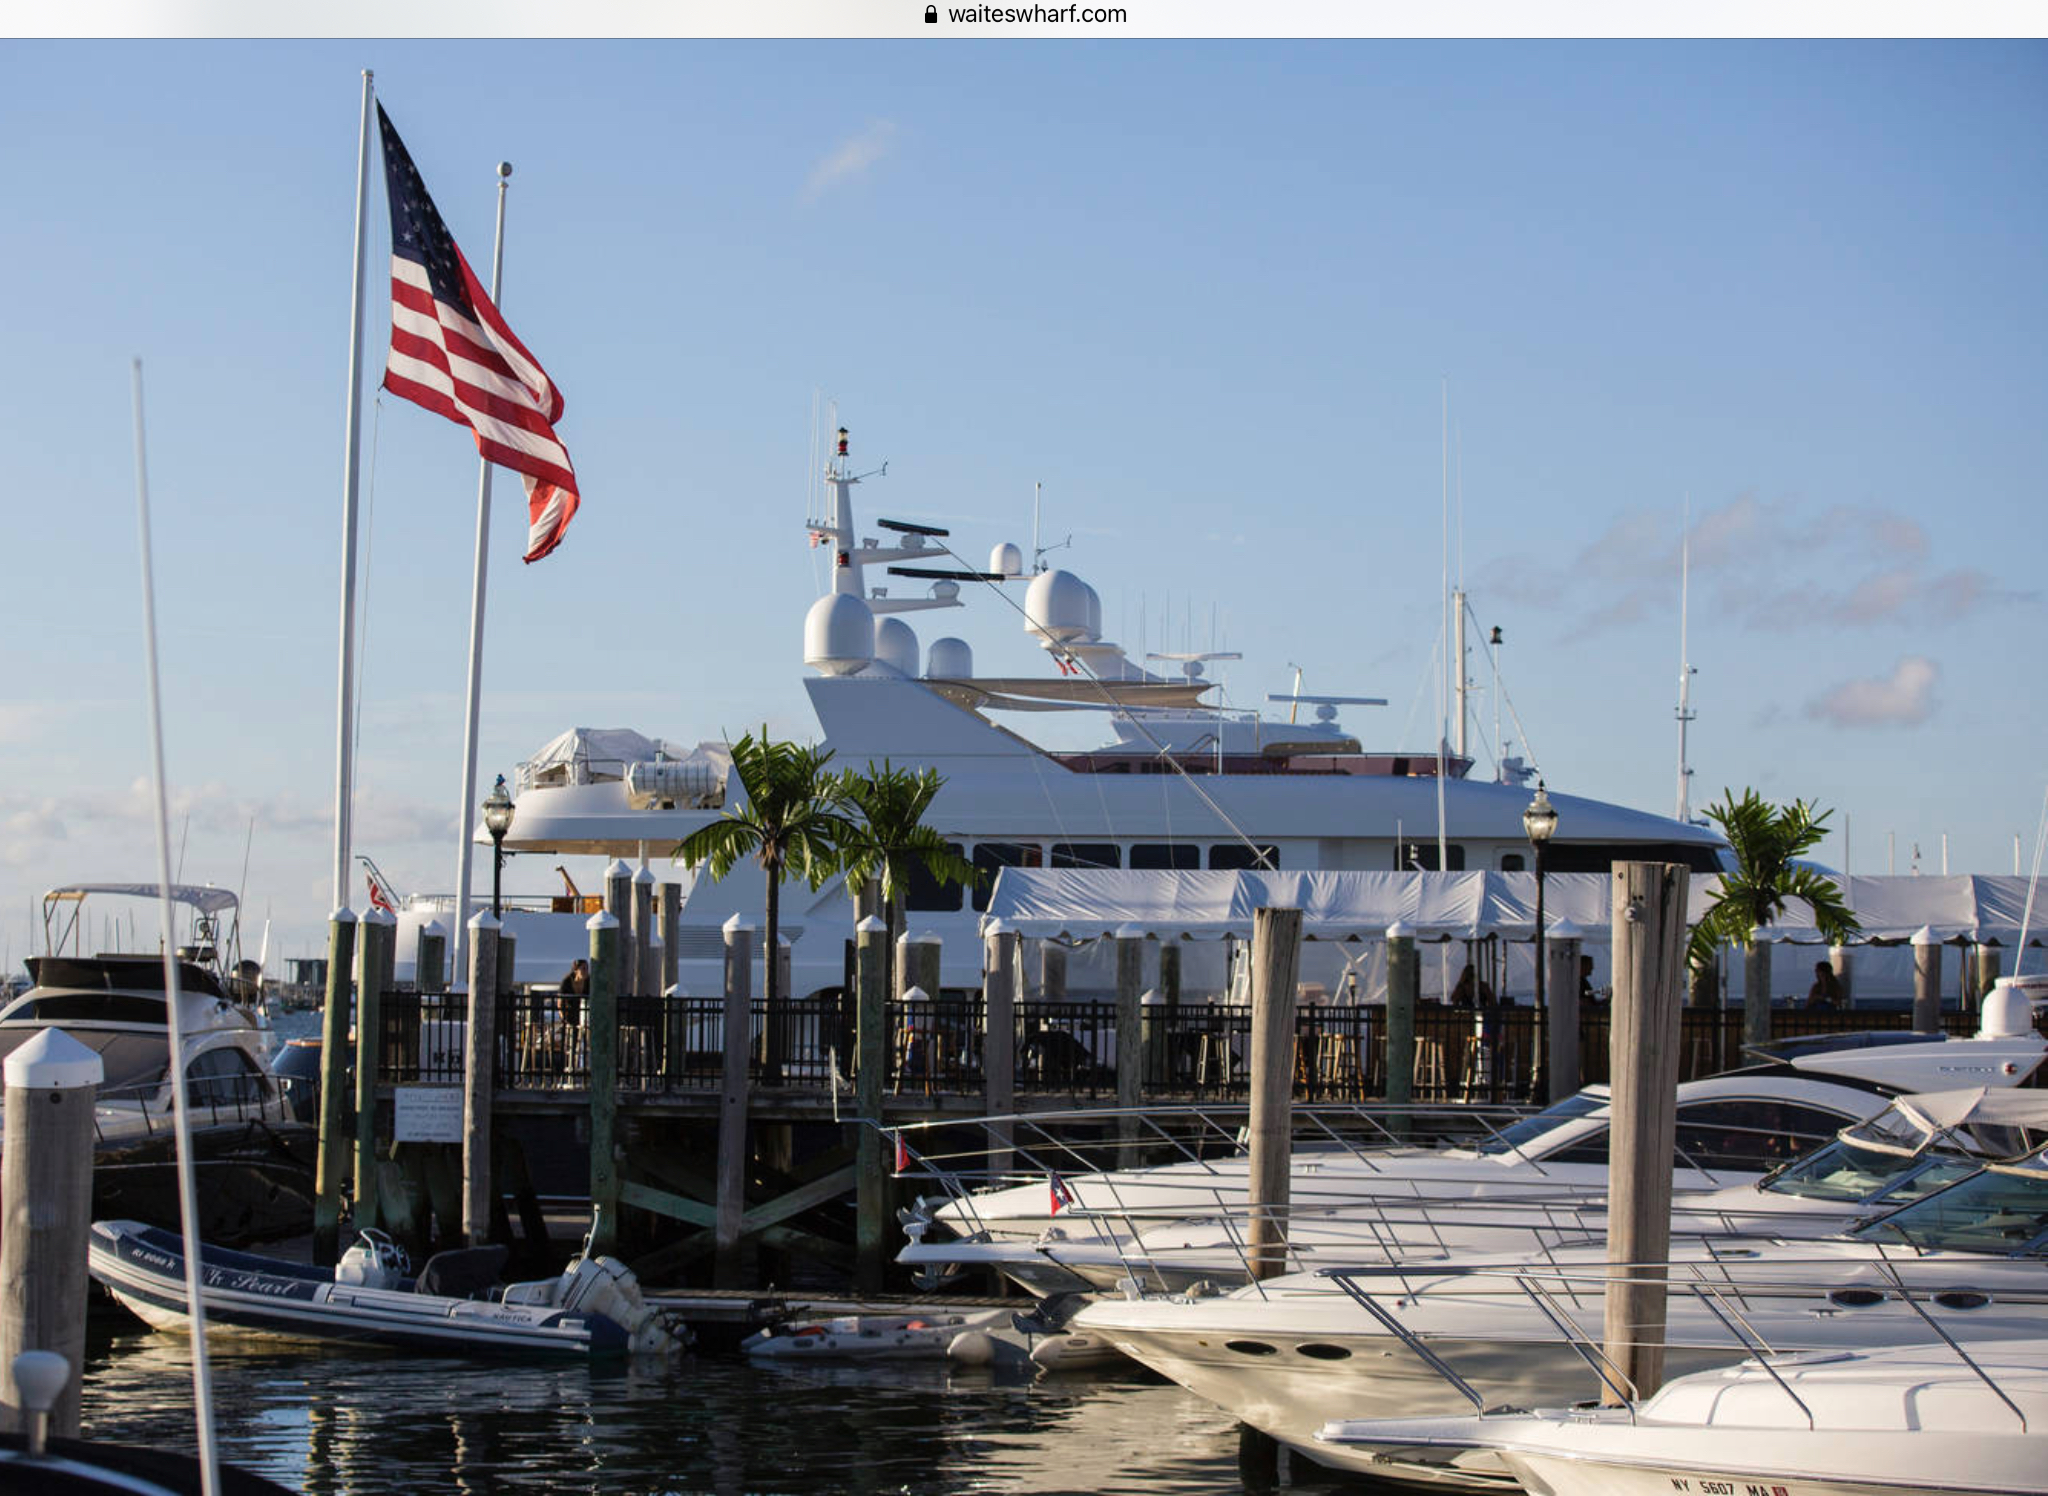 crewed yacht charters newport ri